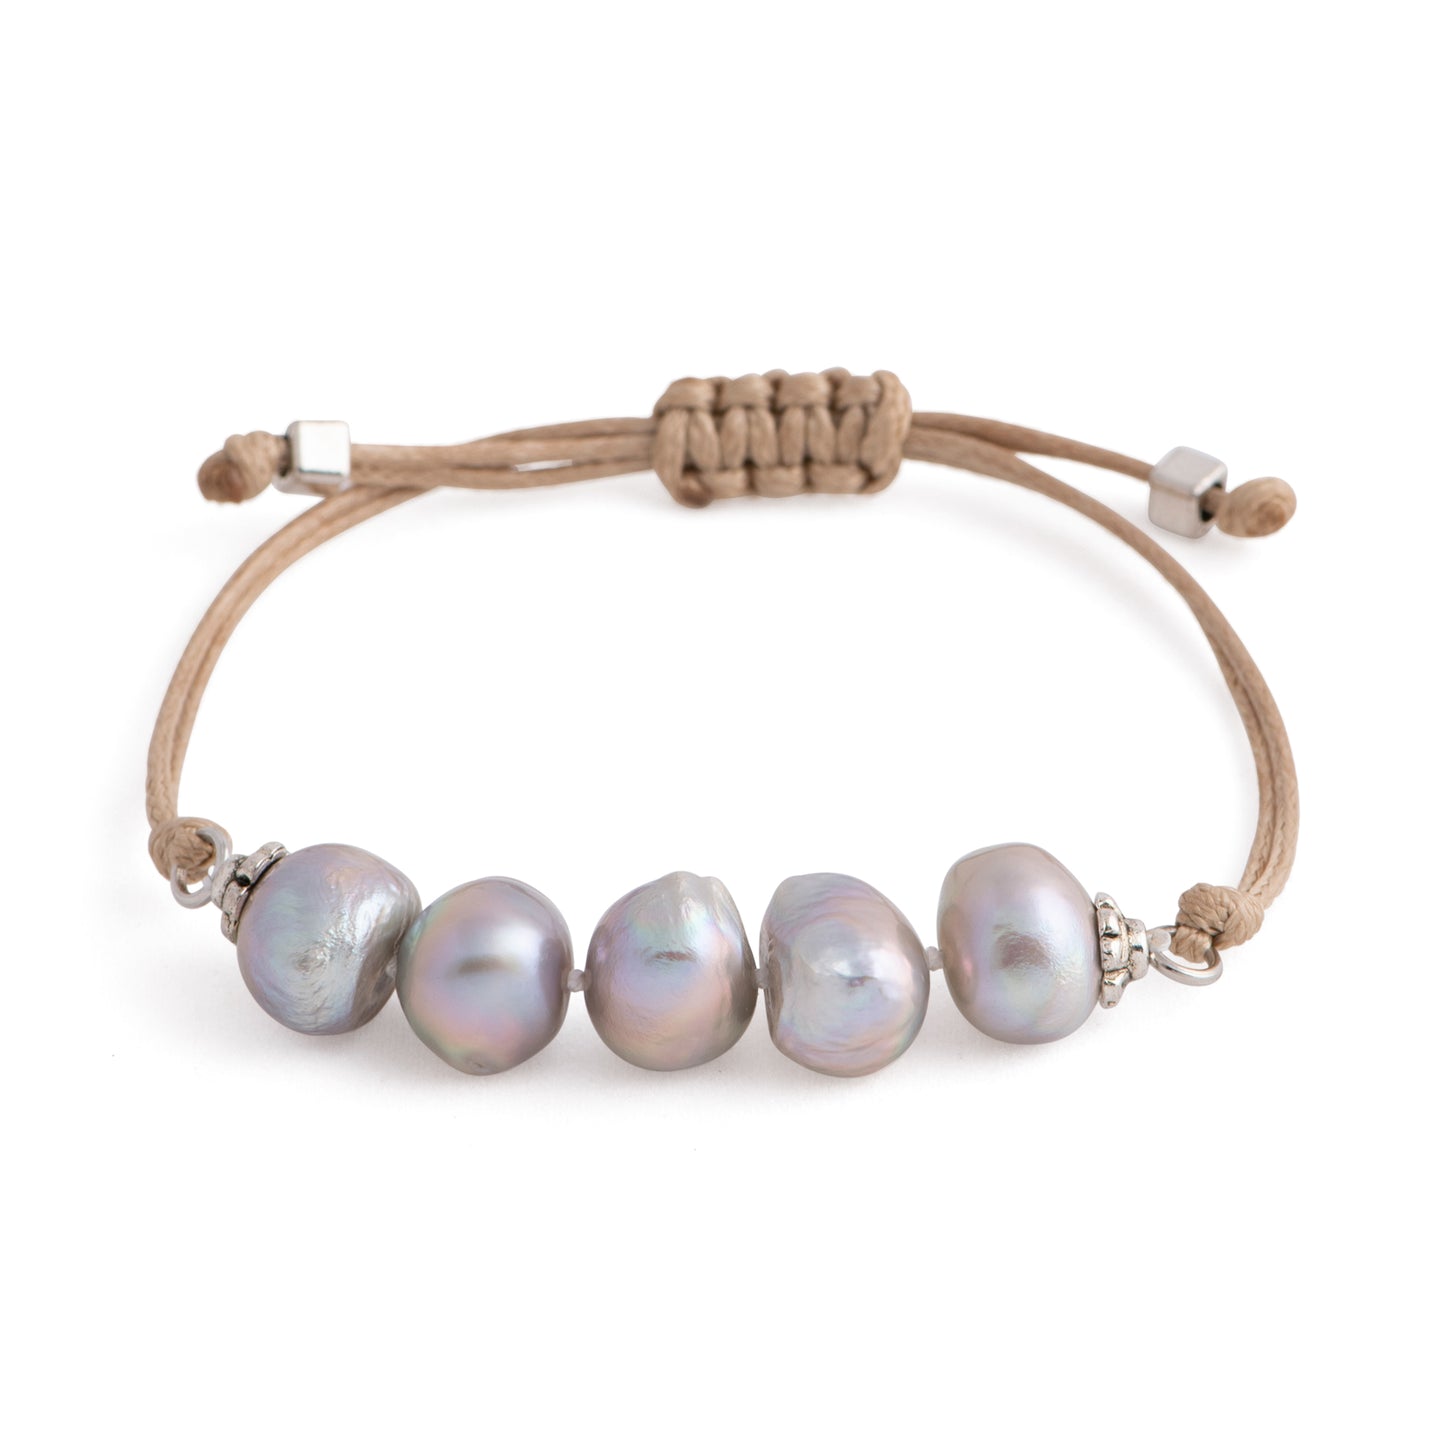 Aegean - Five freshwater pearl adjustable string bracelet (Tan strand, silver pearls)